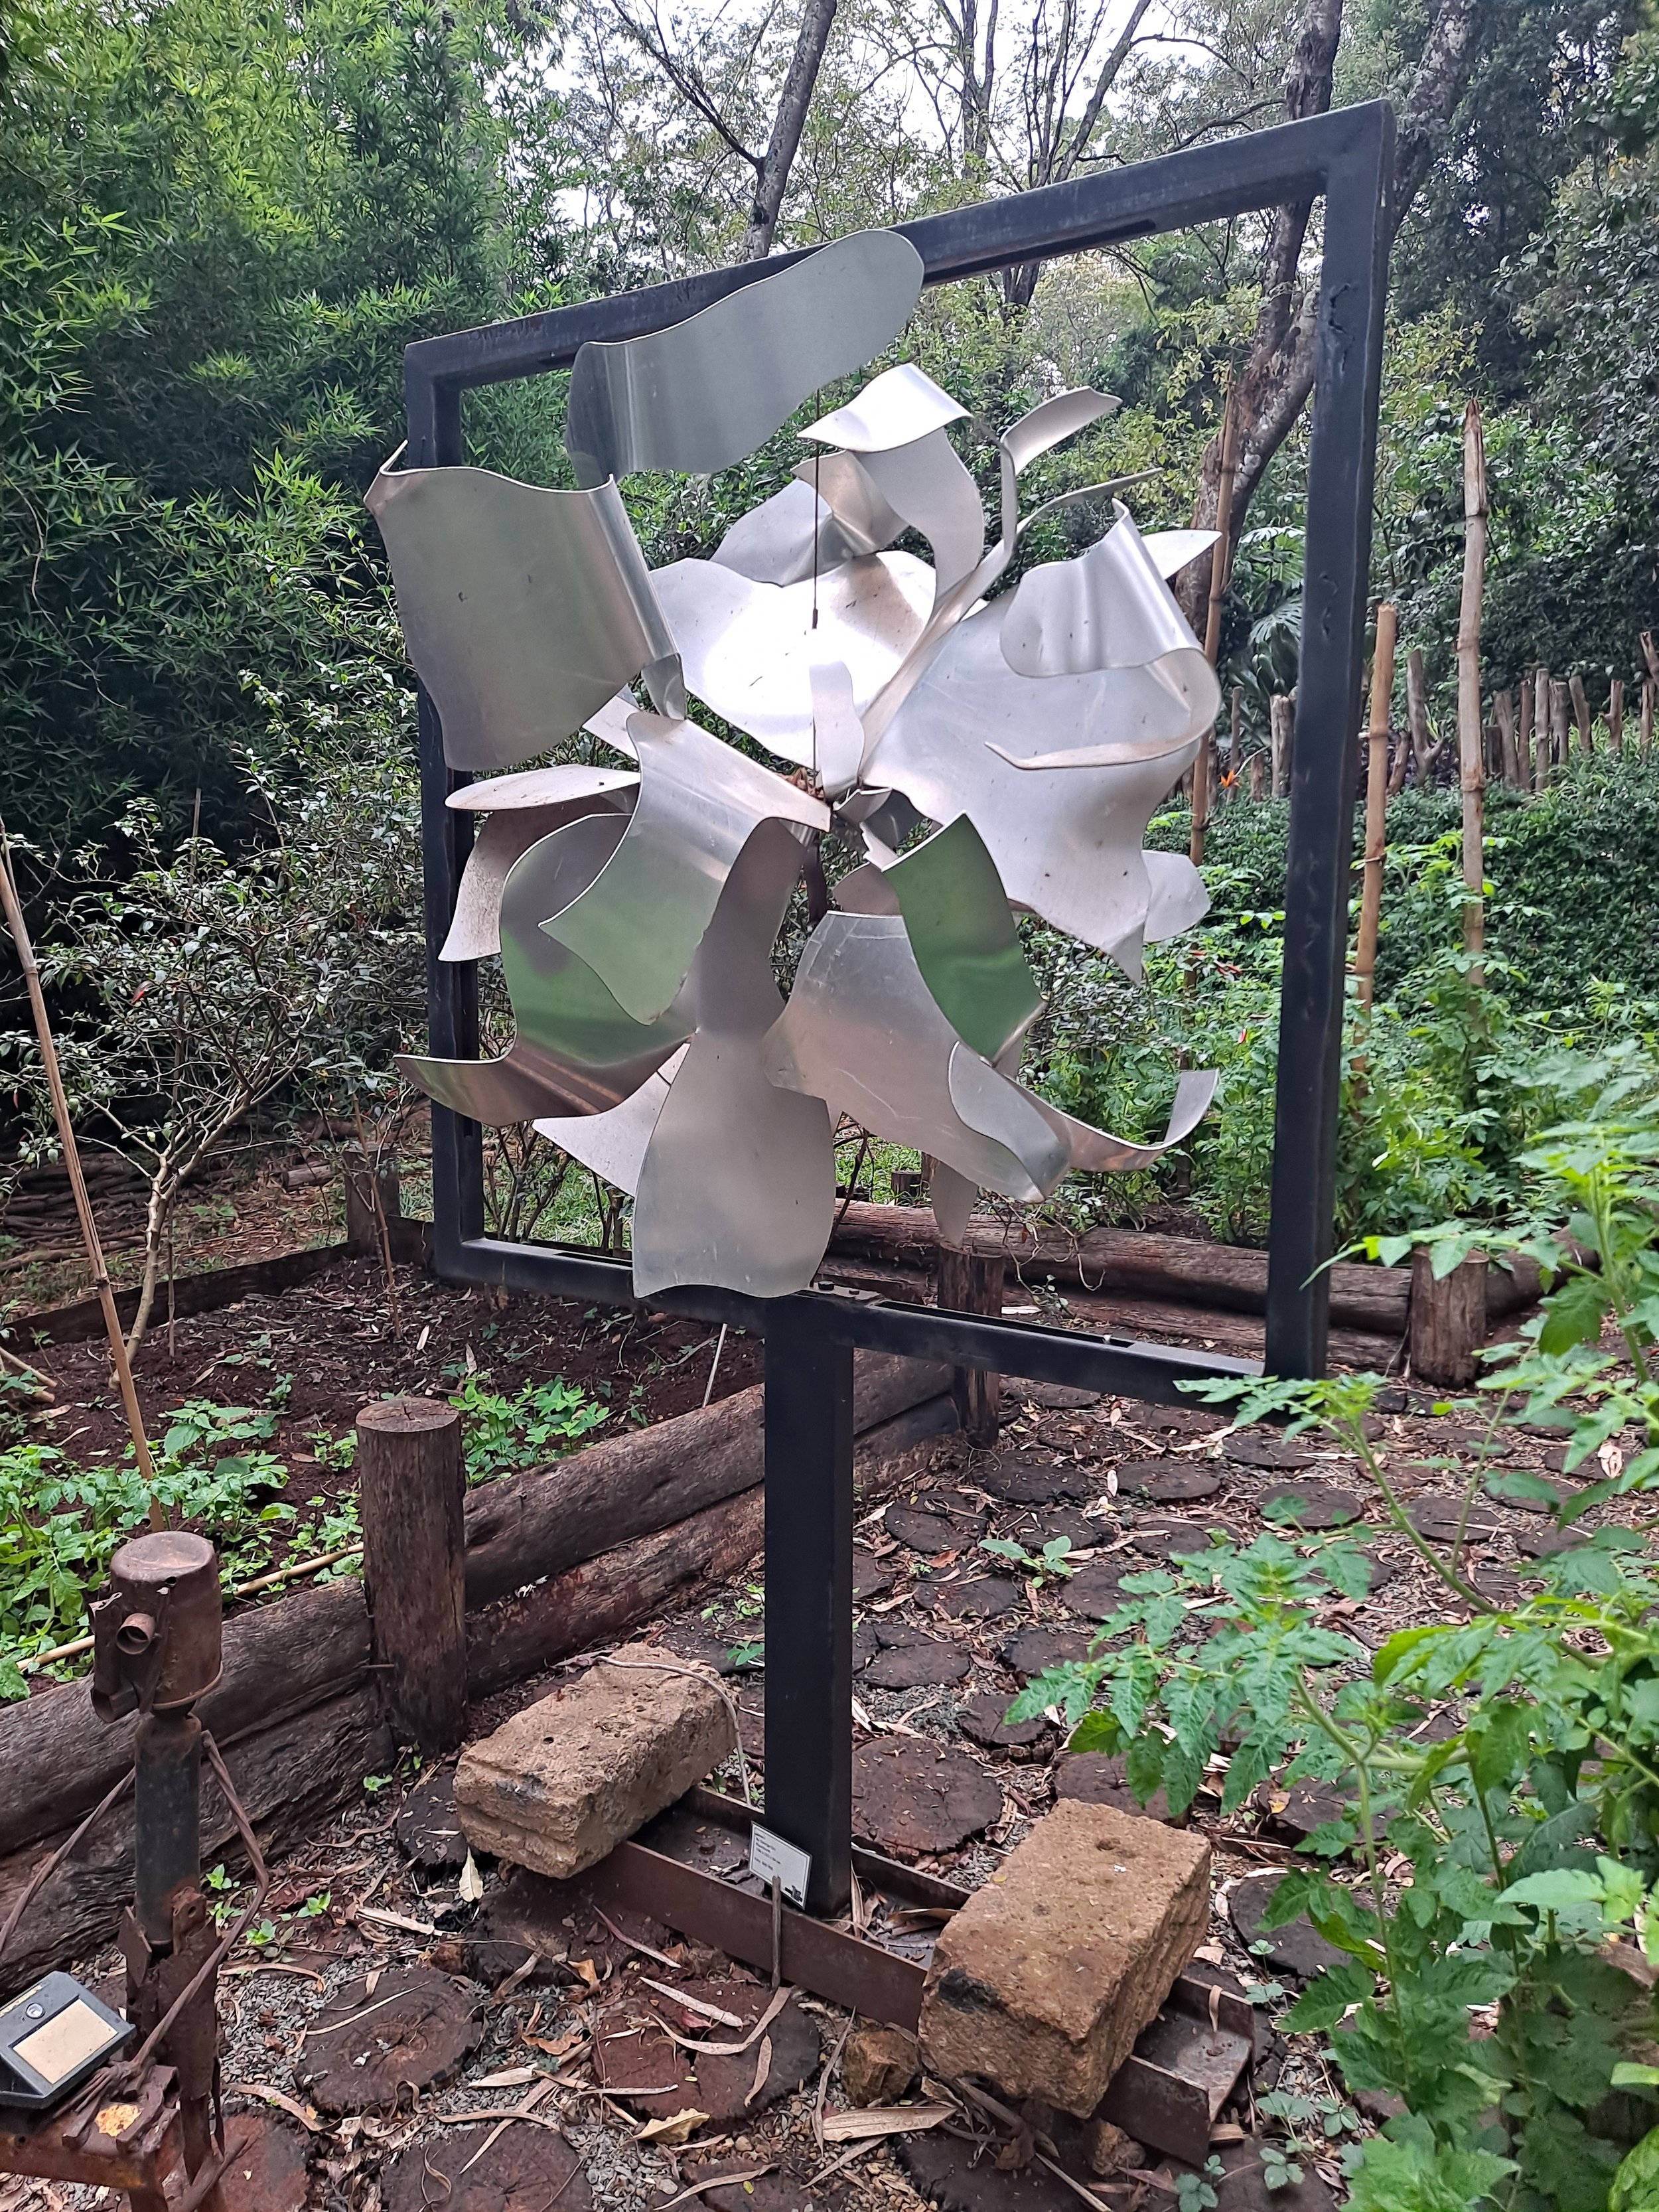 A Sculpture in the Garden